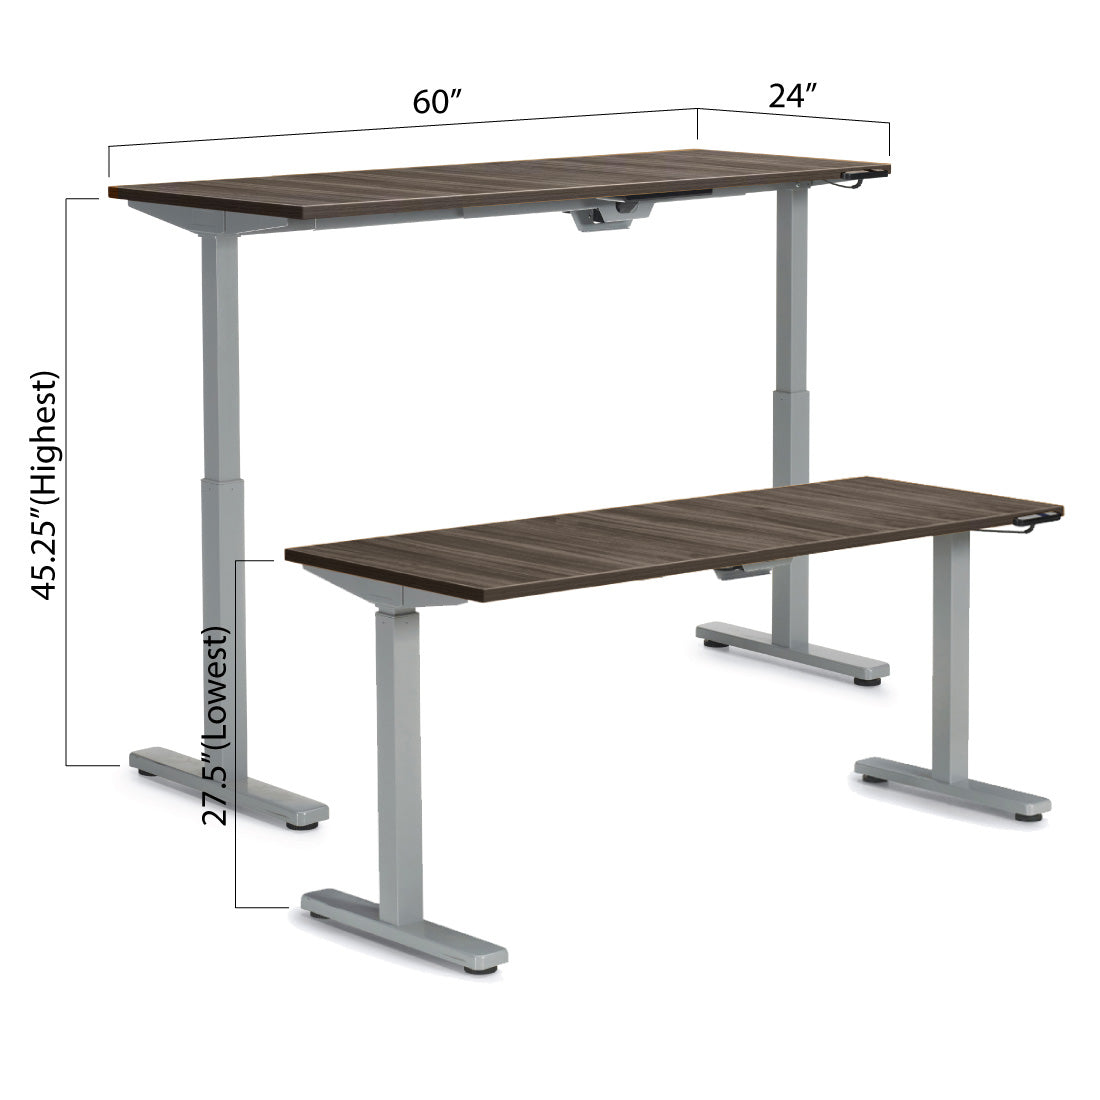 Height Adjustable Desk 60" x 24" - Kainosbuy.com